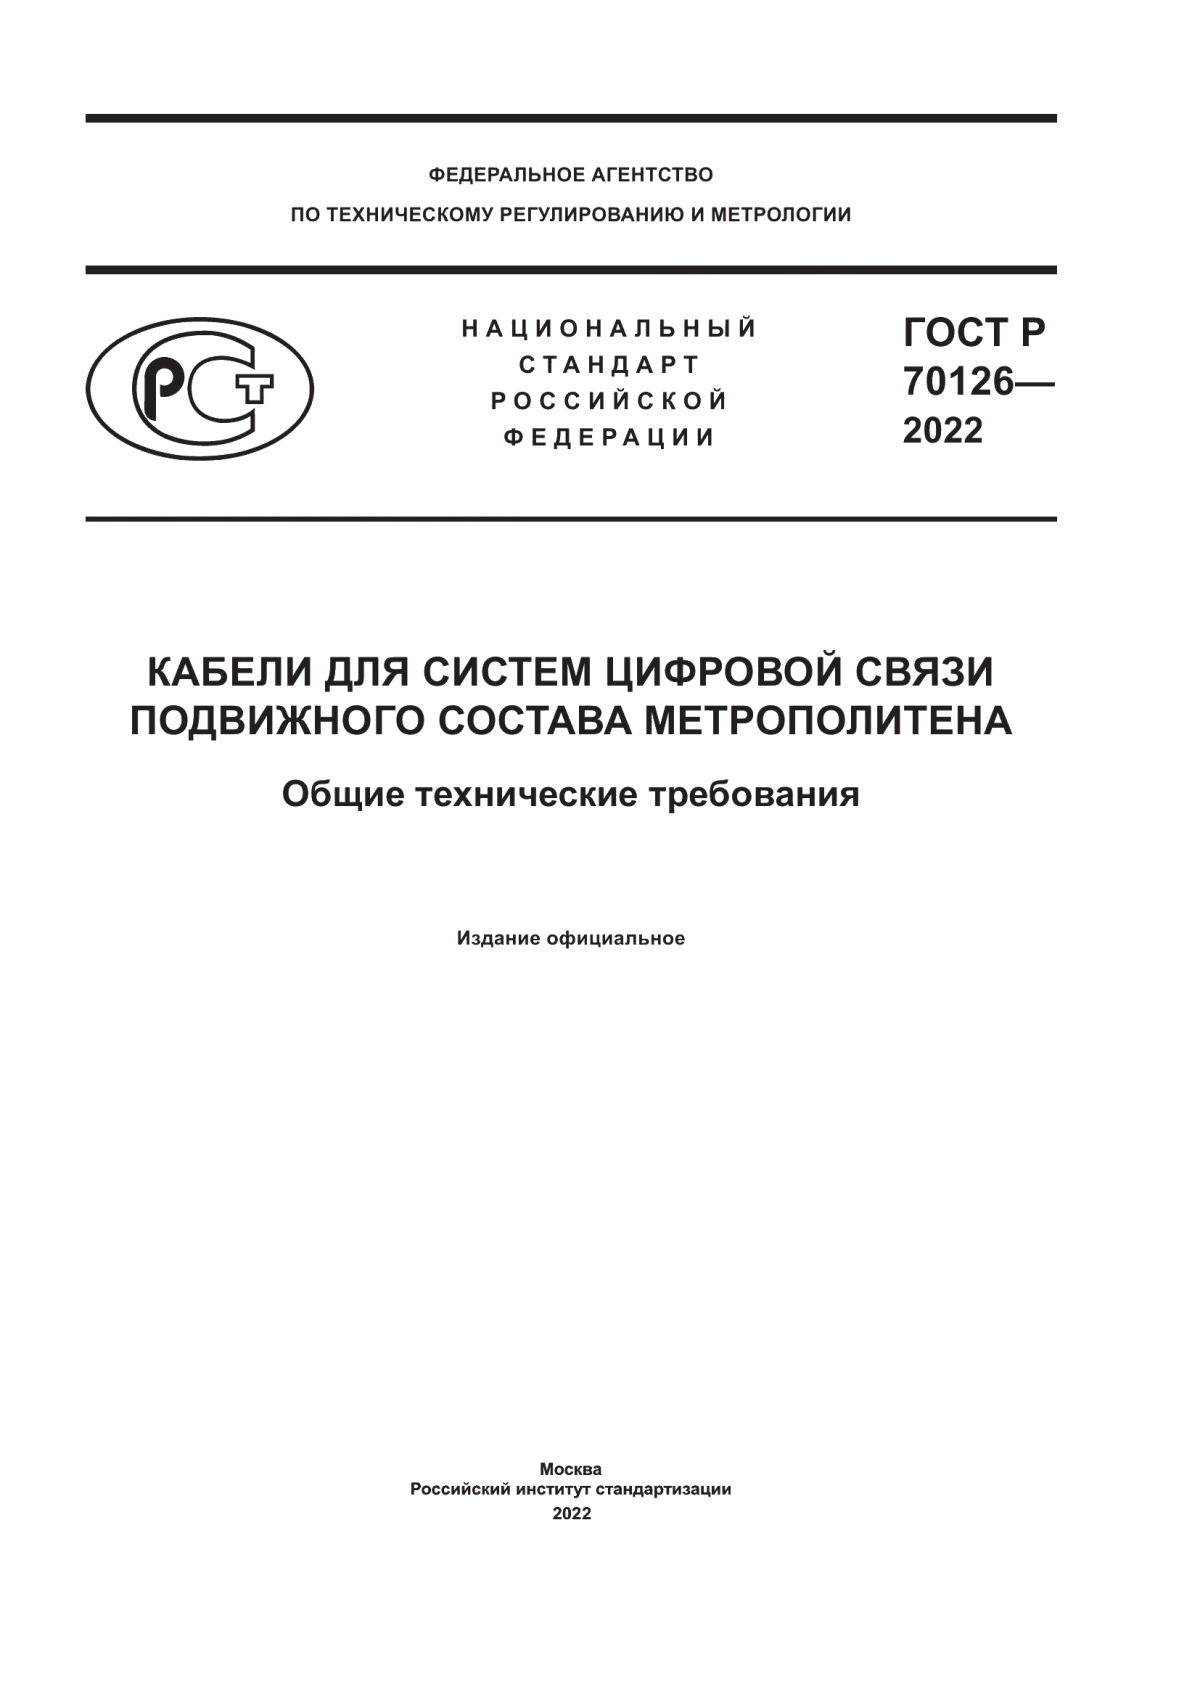 ГОСТ Р 70126-2022 Кабели для систем цифровой связи подвижного состава метрополитена. Общие технические требования